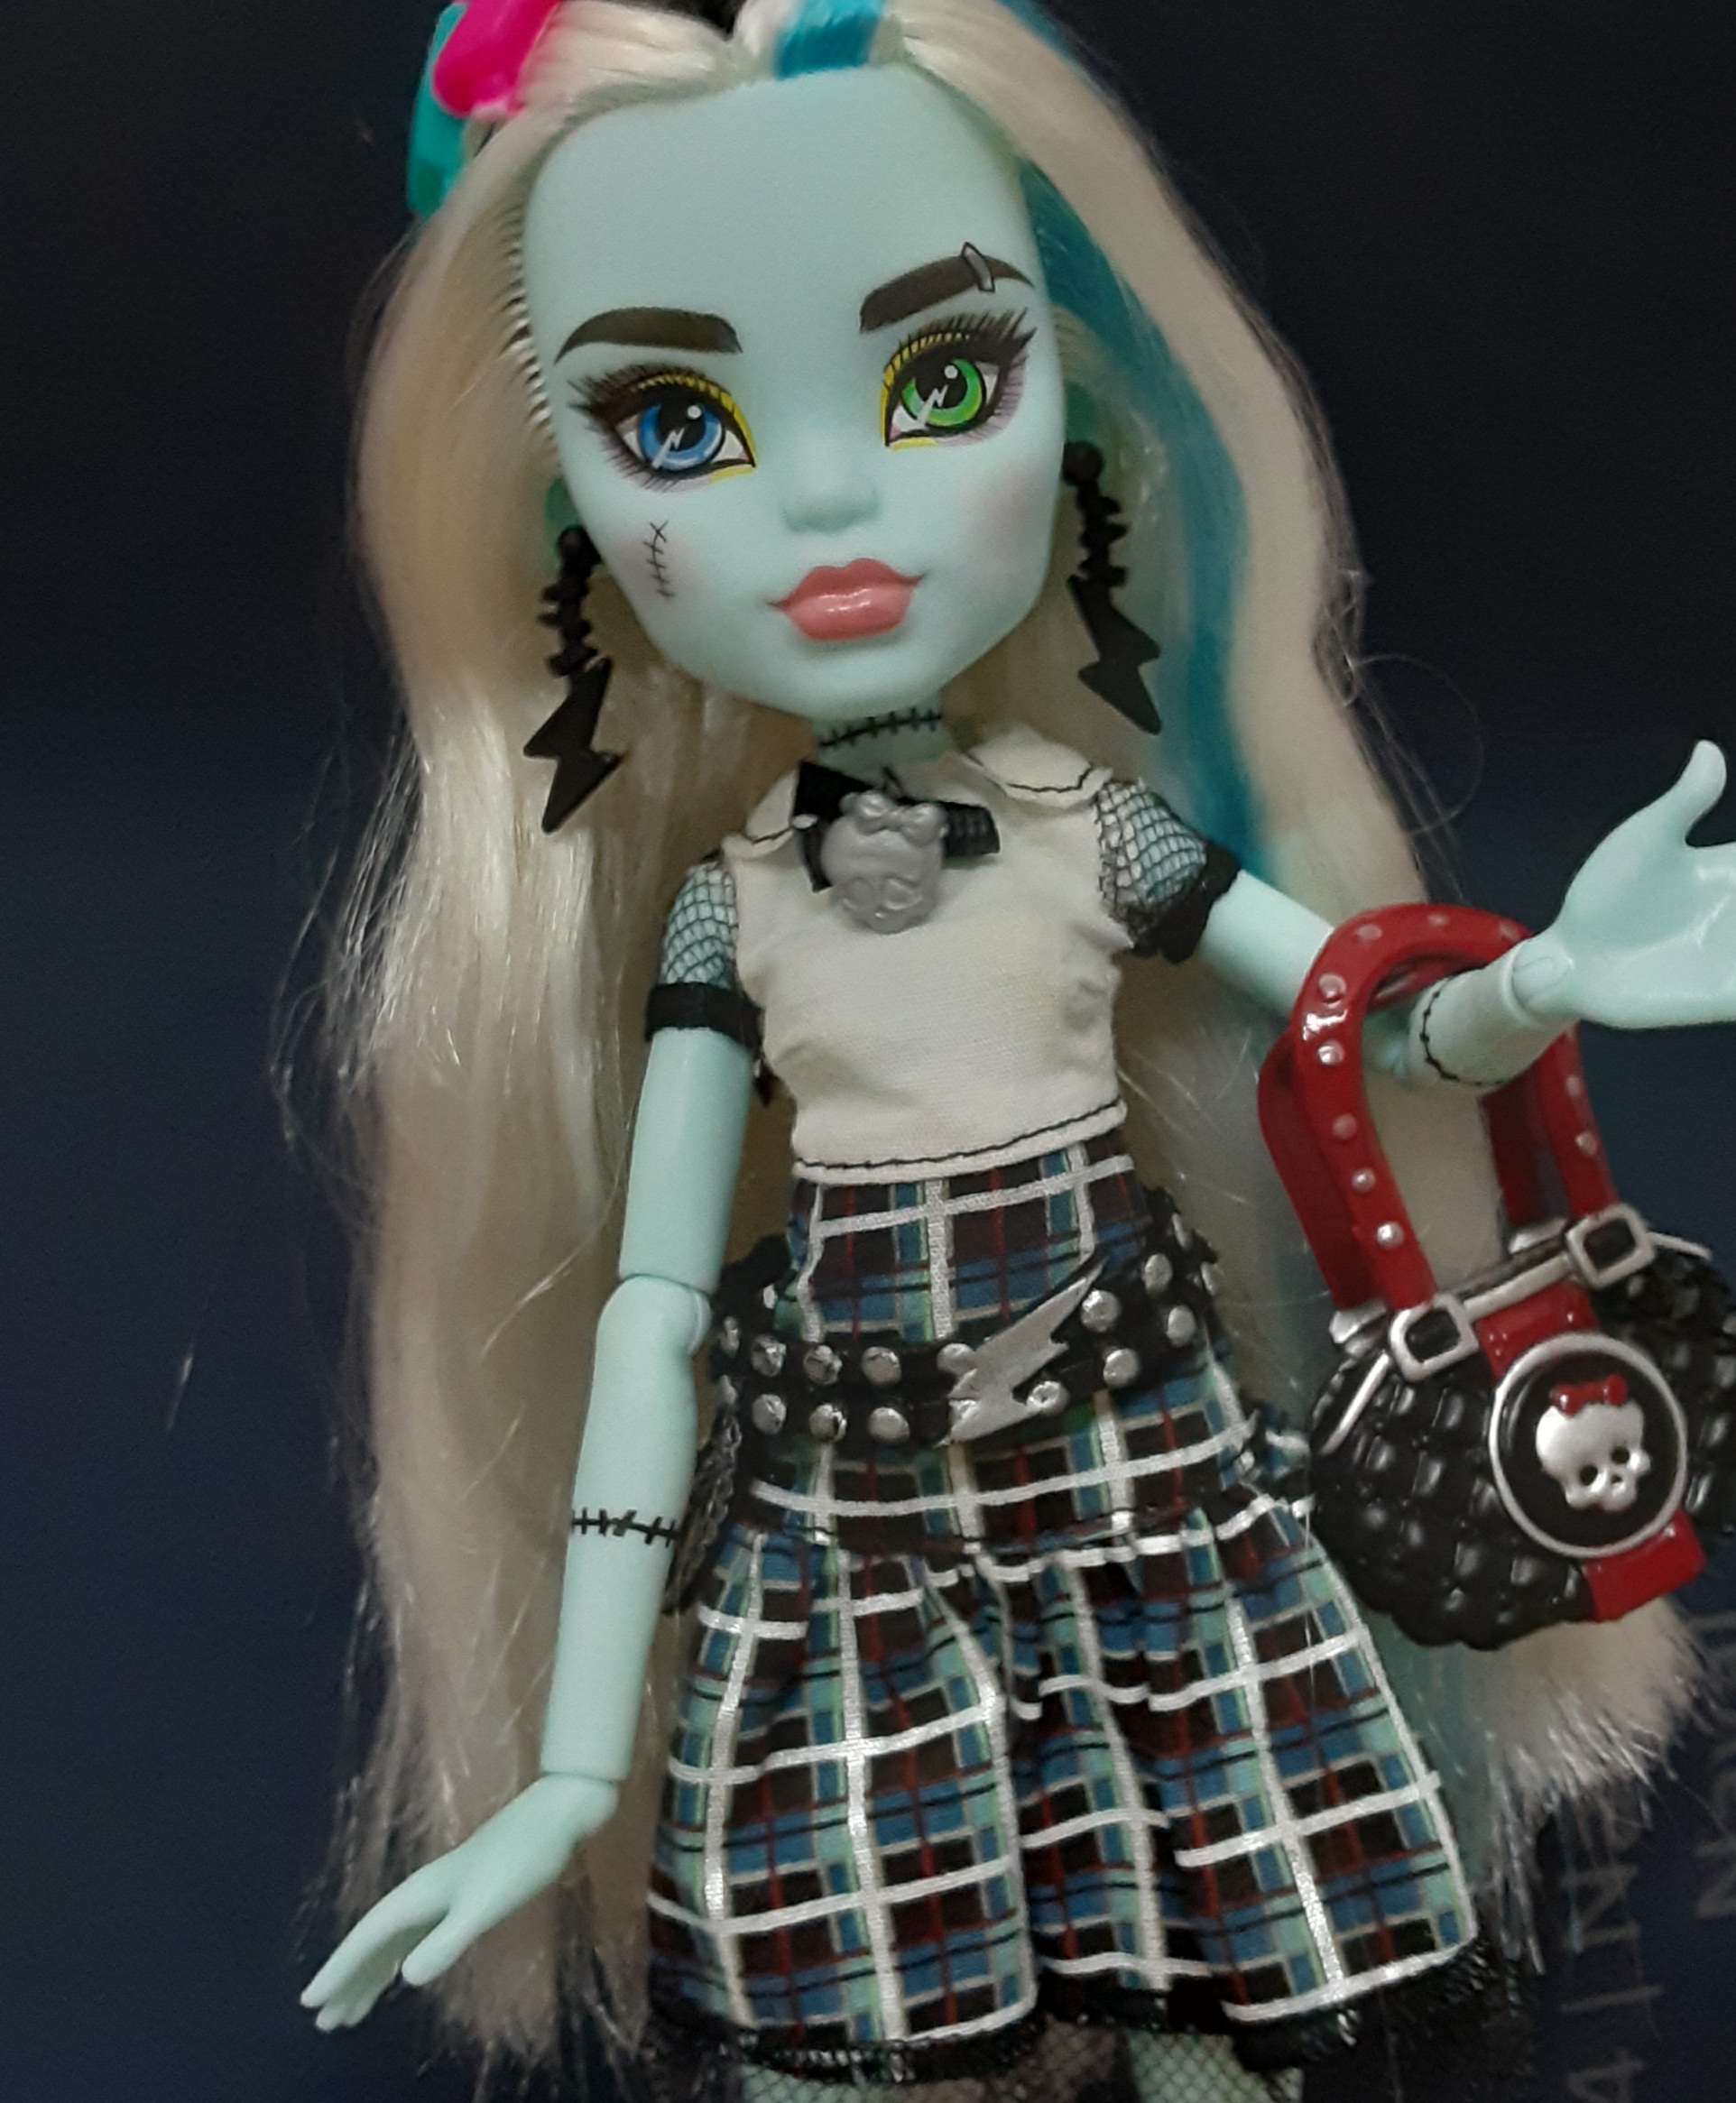 Doll Review: G3 Monster High Clawdeen Wolf & Frankie Stein